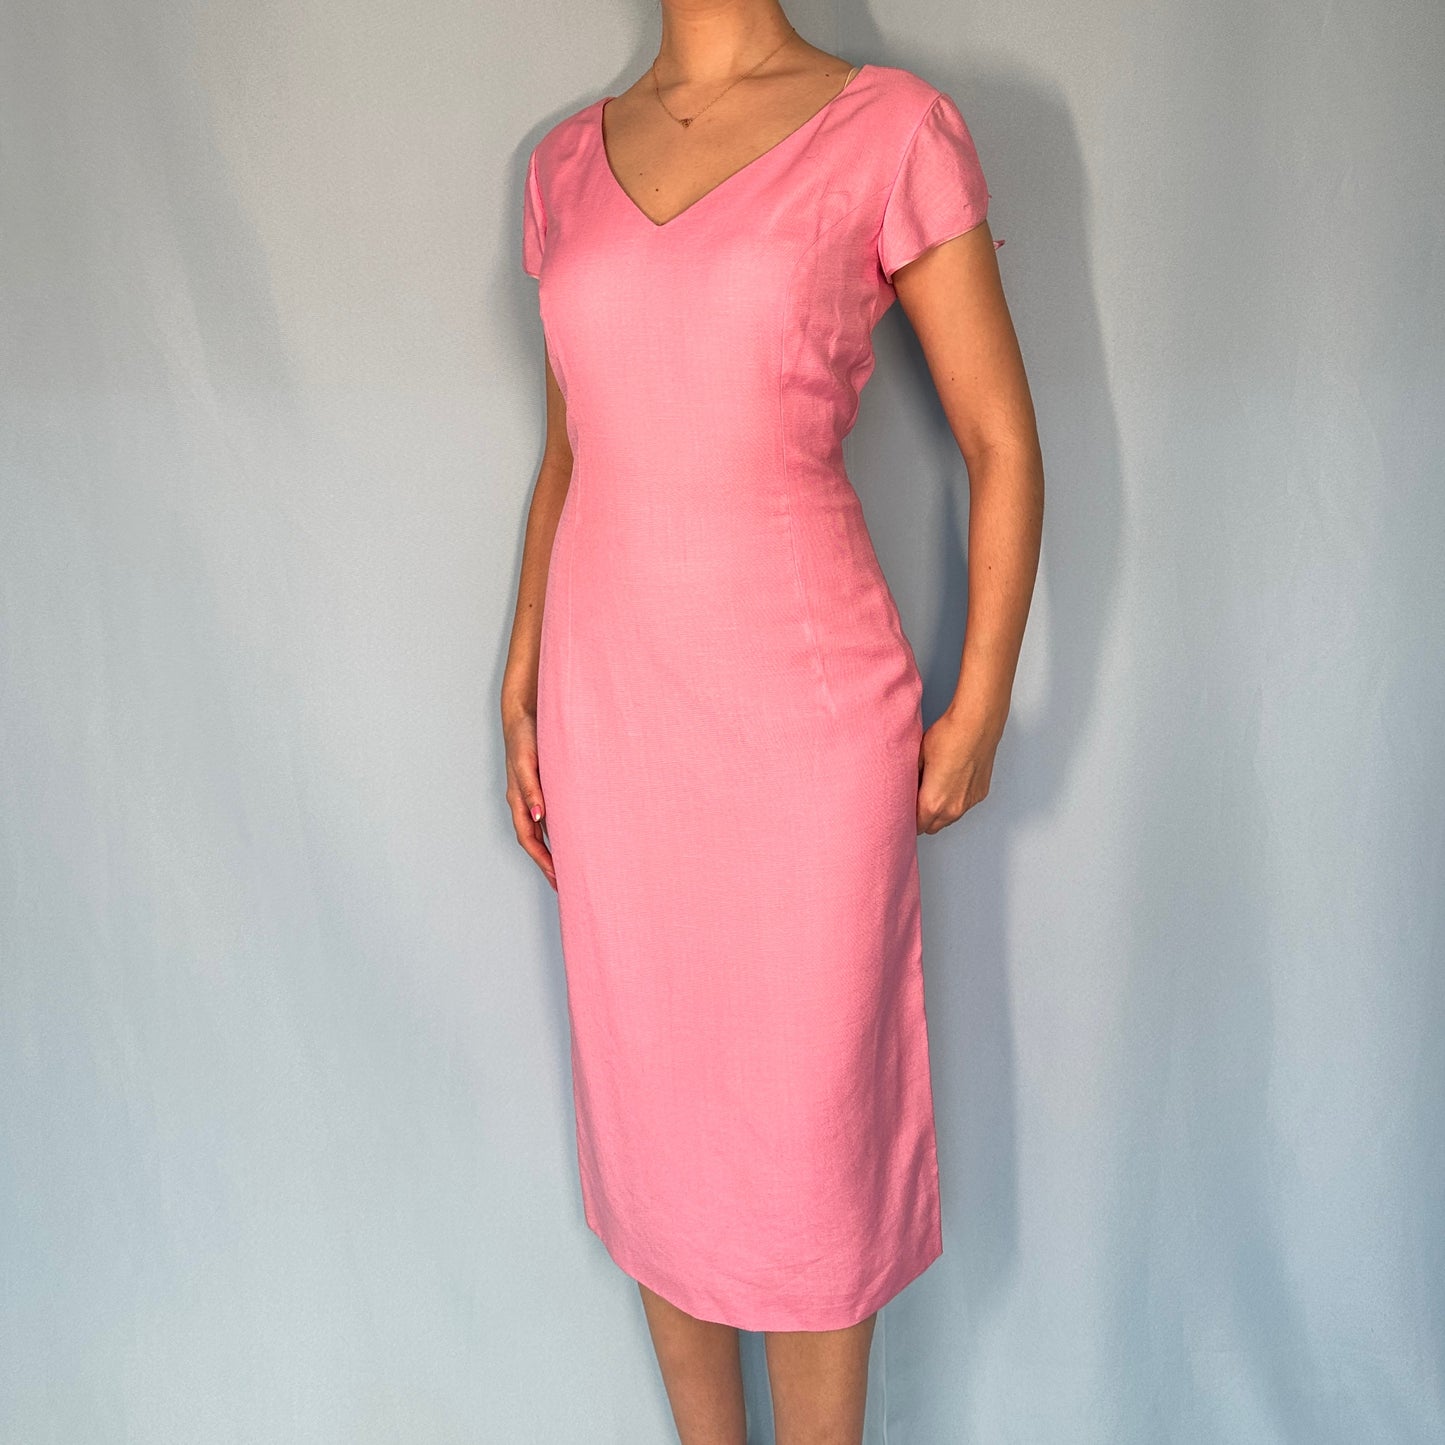 John Galliano Spring 2000 Pink Midi Dress